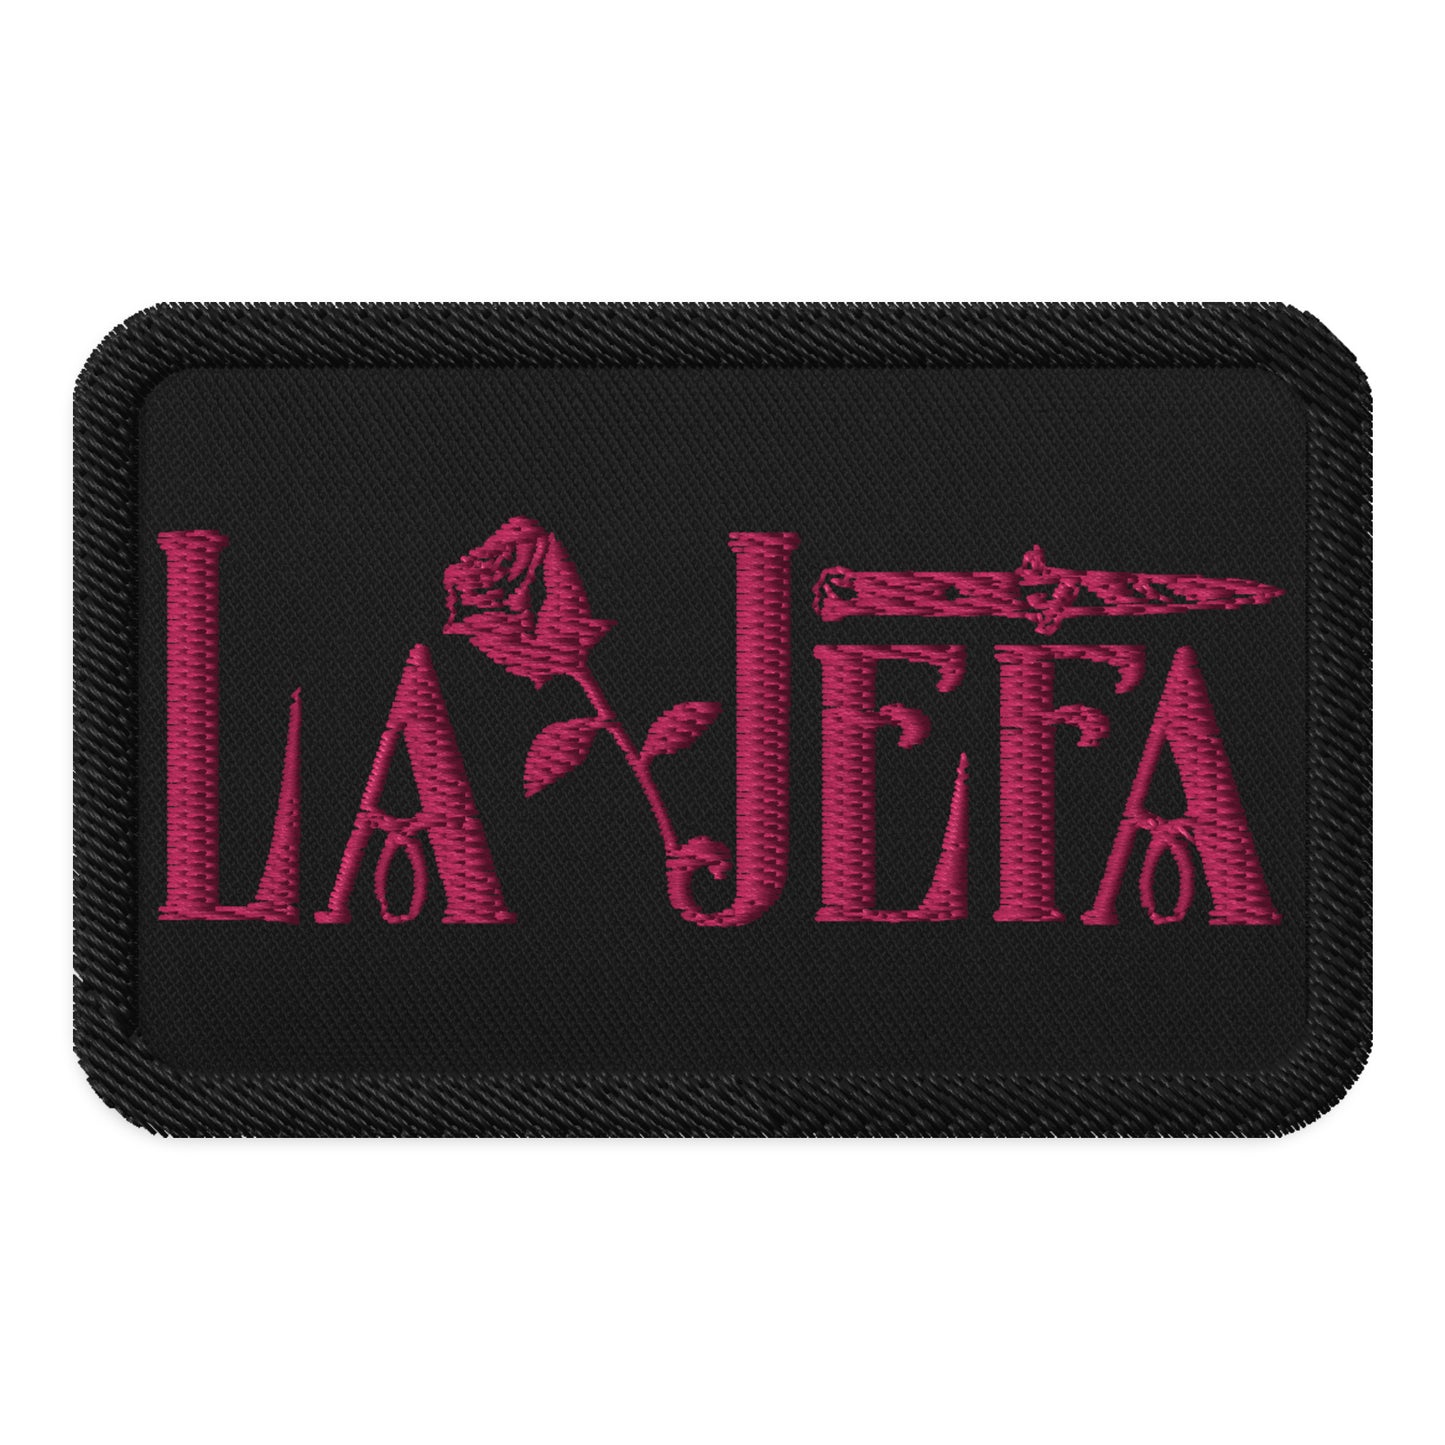 La Jefa "Lady Boss" Embroidered Patch